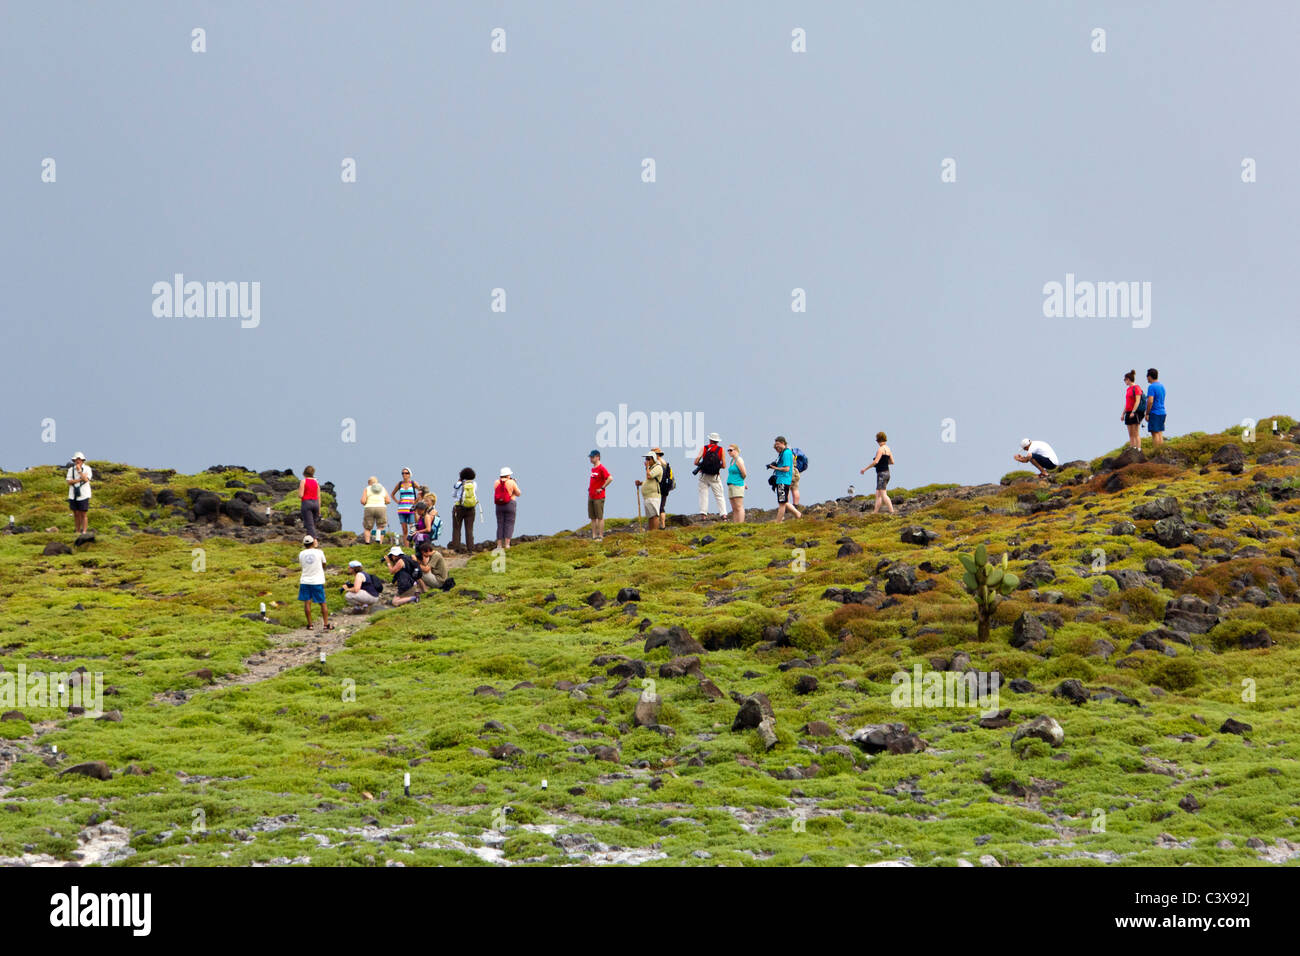 tourists photographing wildlife, South Plaza Island Galapagos Islands, Ecuador Stock Photo